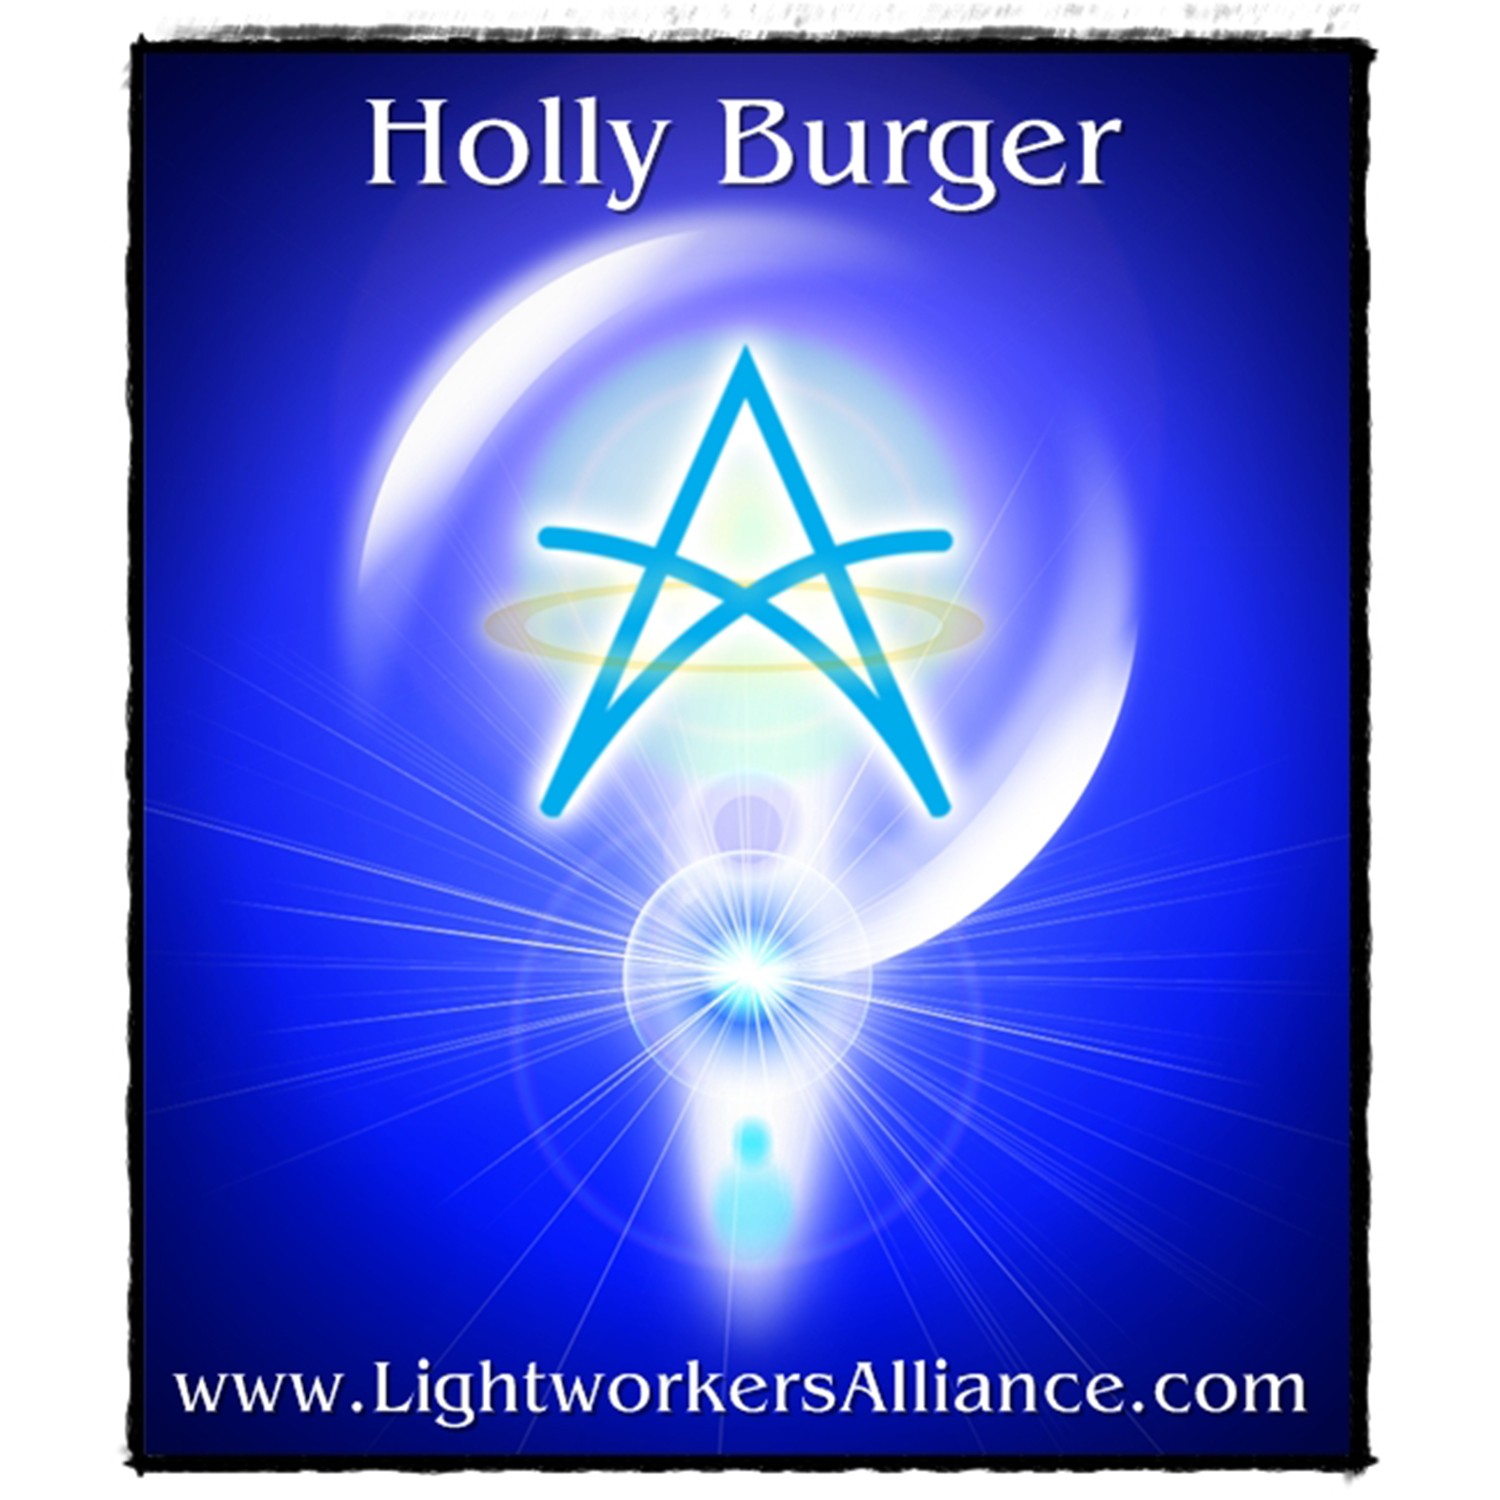 Lightworkers Alliance